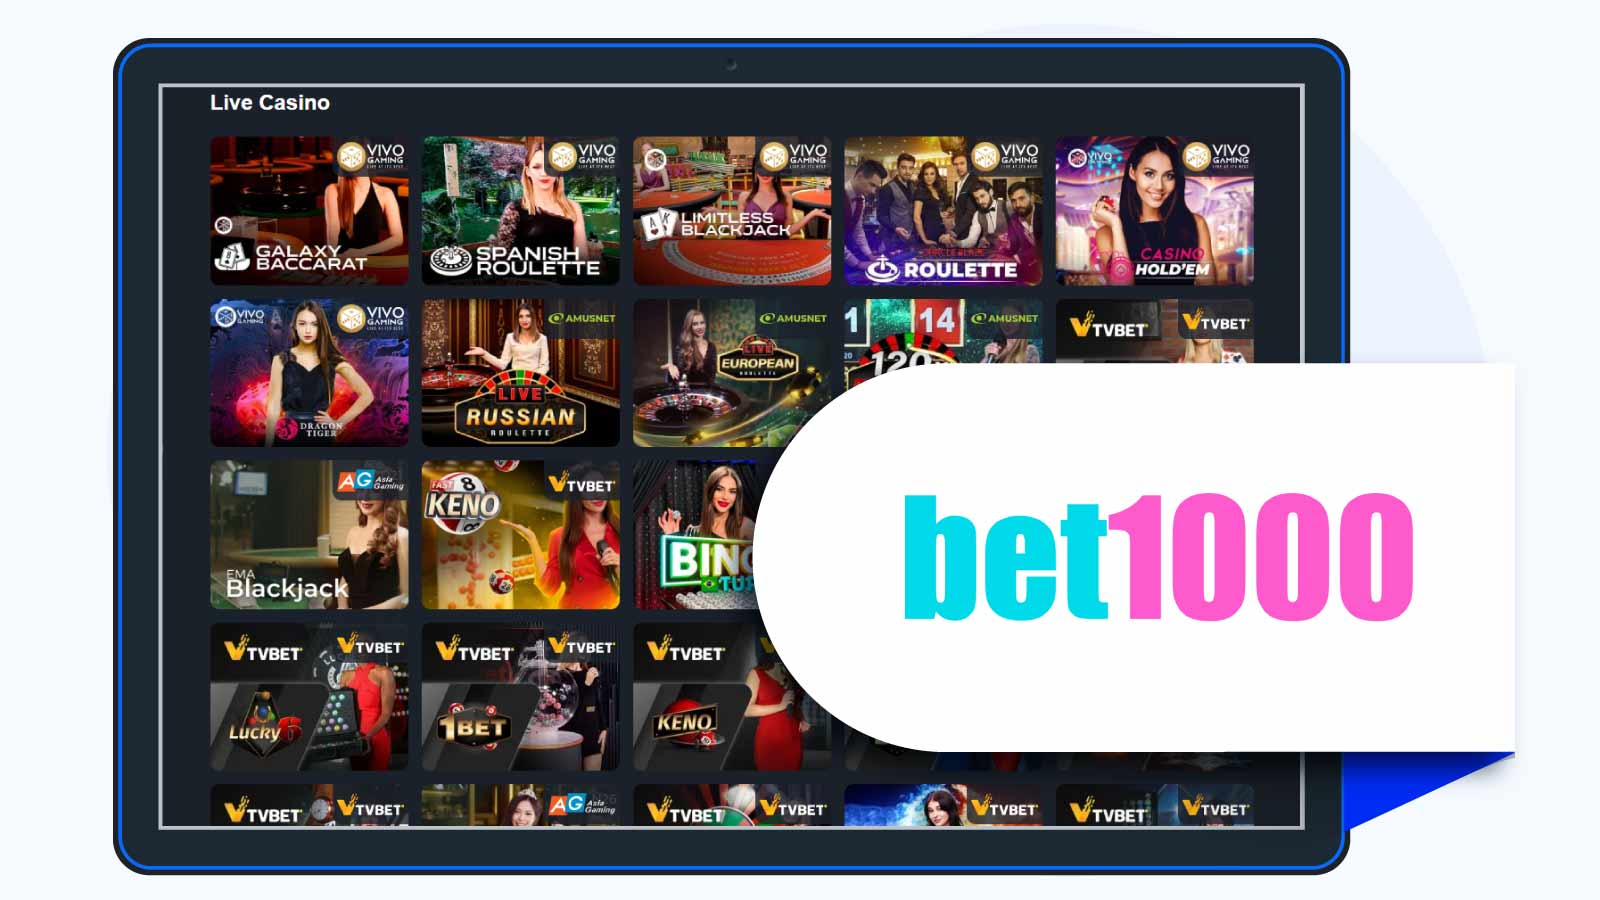 Bet1000 Casino